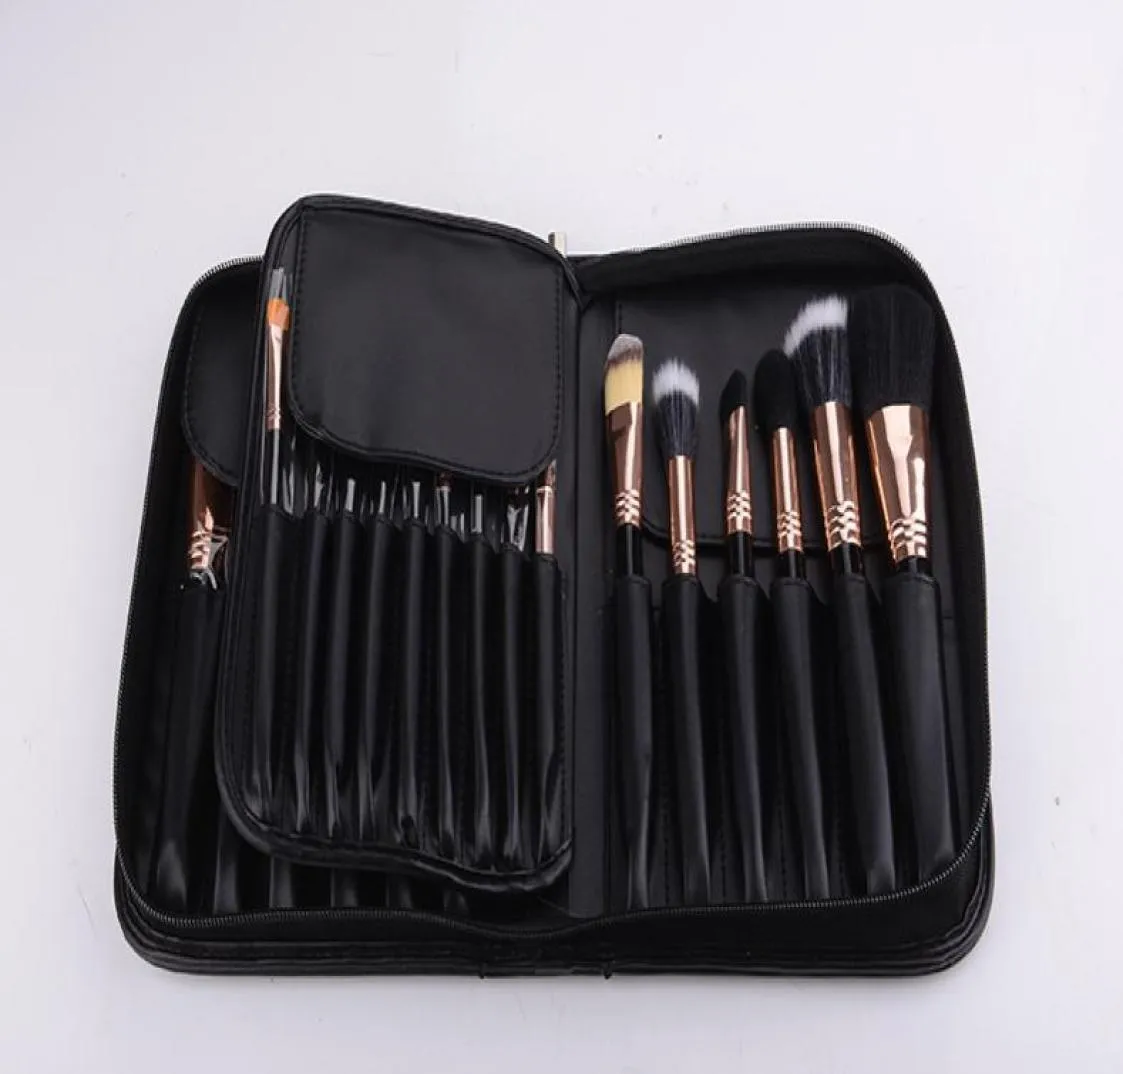 Brand Makeup Brushes Complete Kit Rose Gold Makeup Brush Kit Pinceis Maquiagem 29pcsset4565498